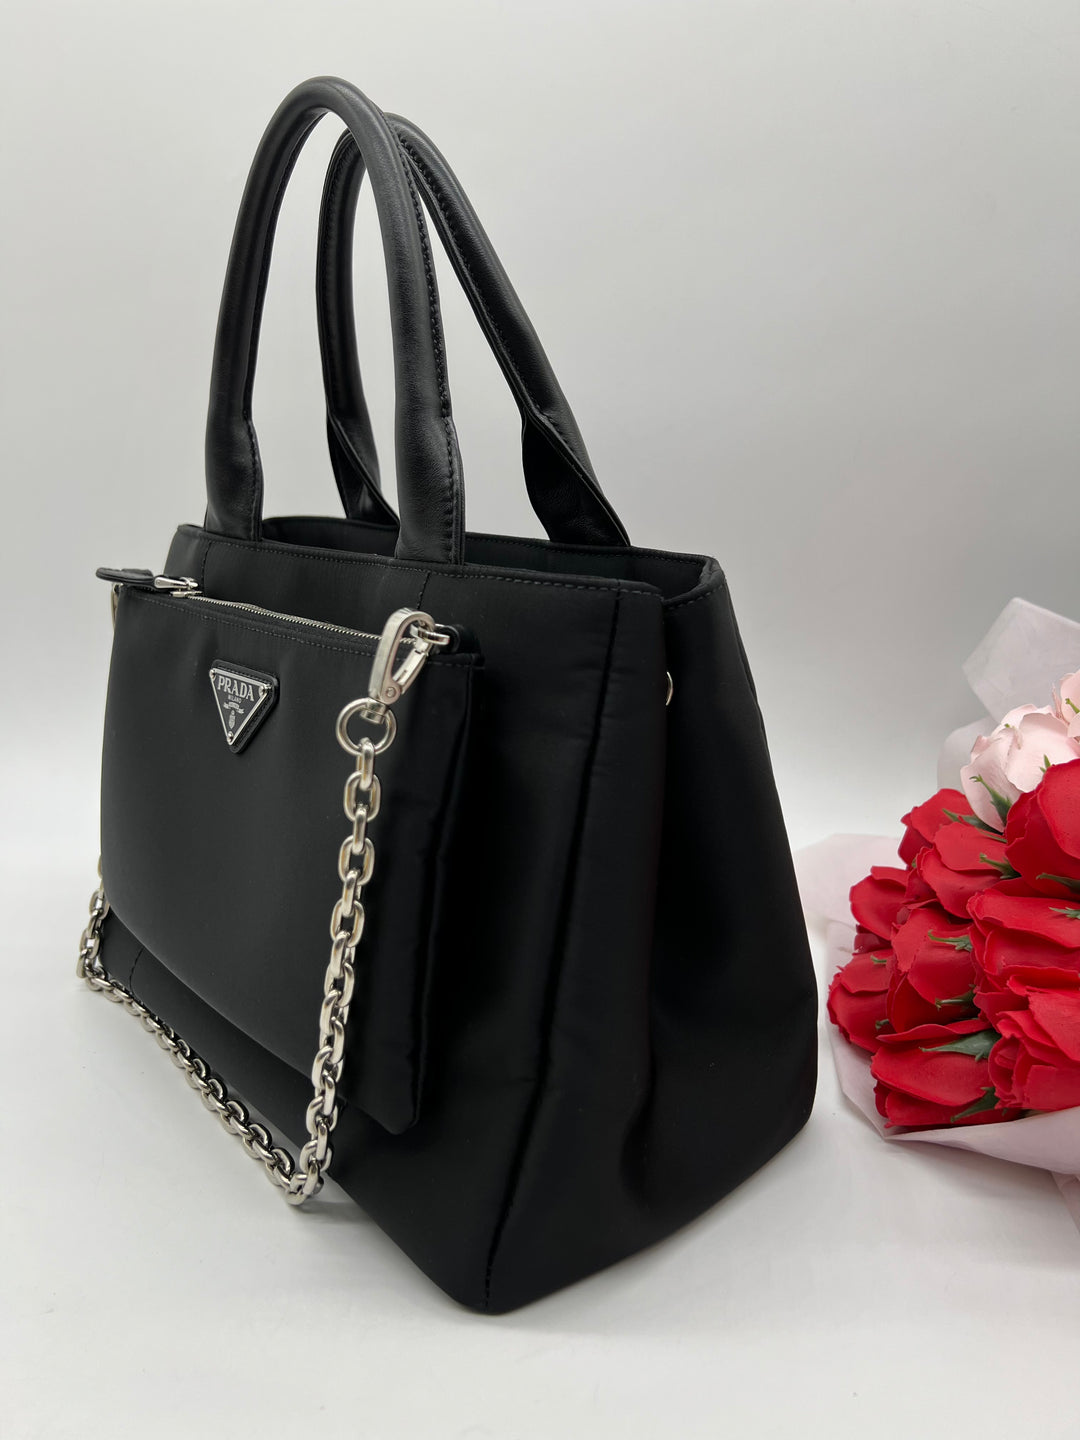 Prada nylon handbag with triangular logo